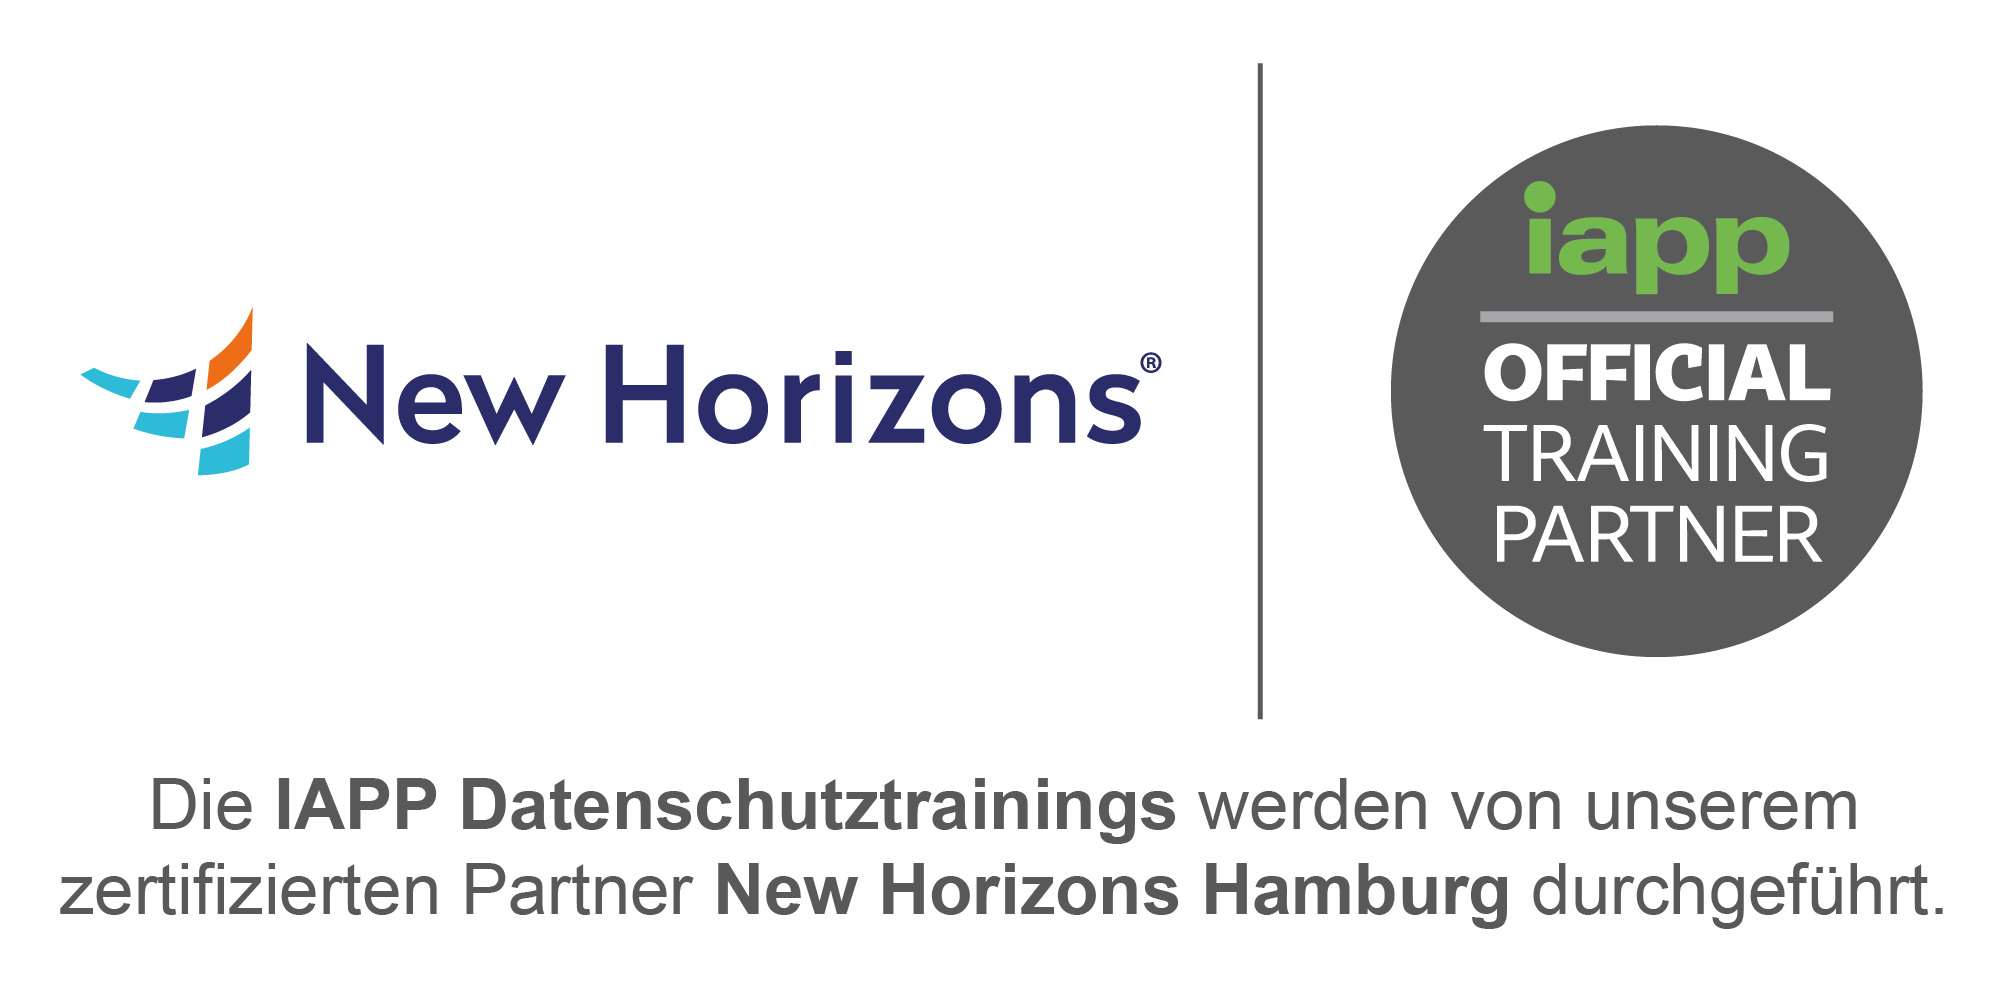 New Horizons Hamburg ist IAPP TrainingsPartner